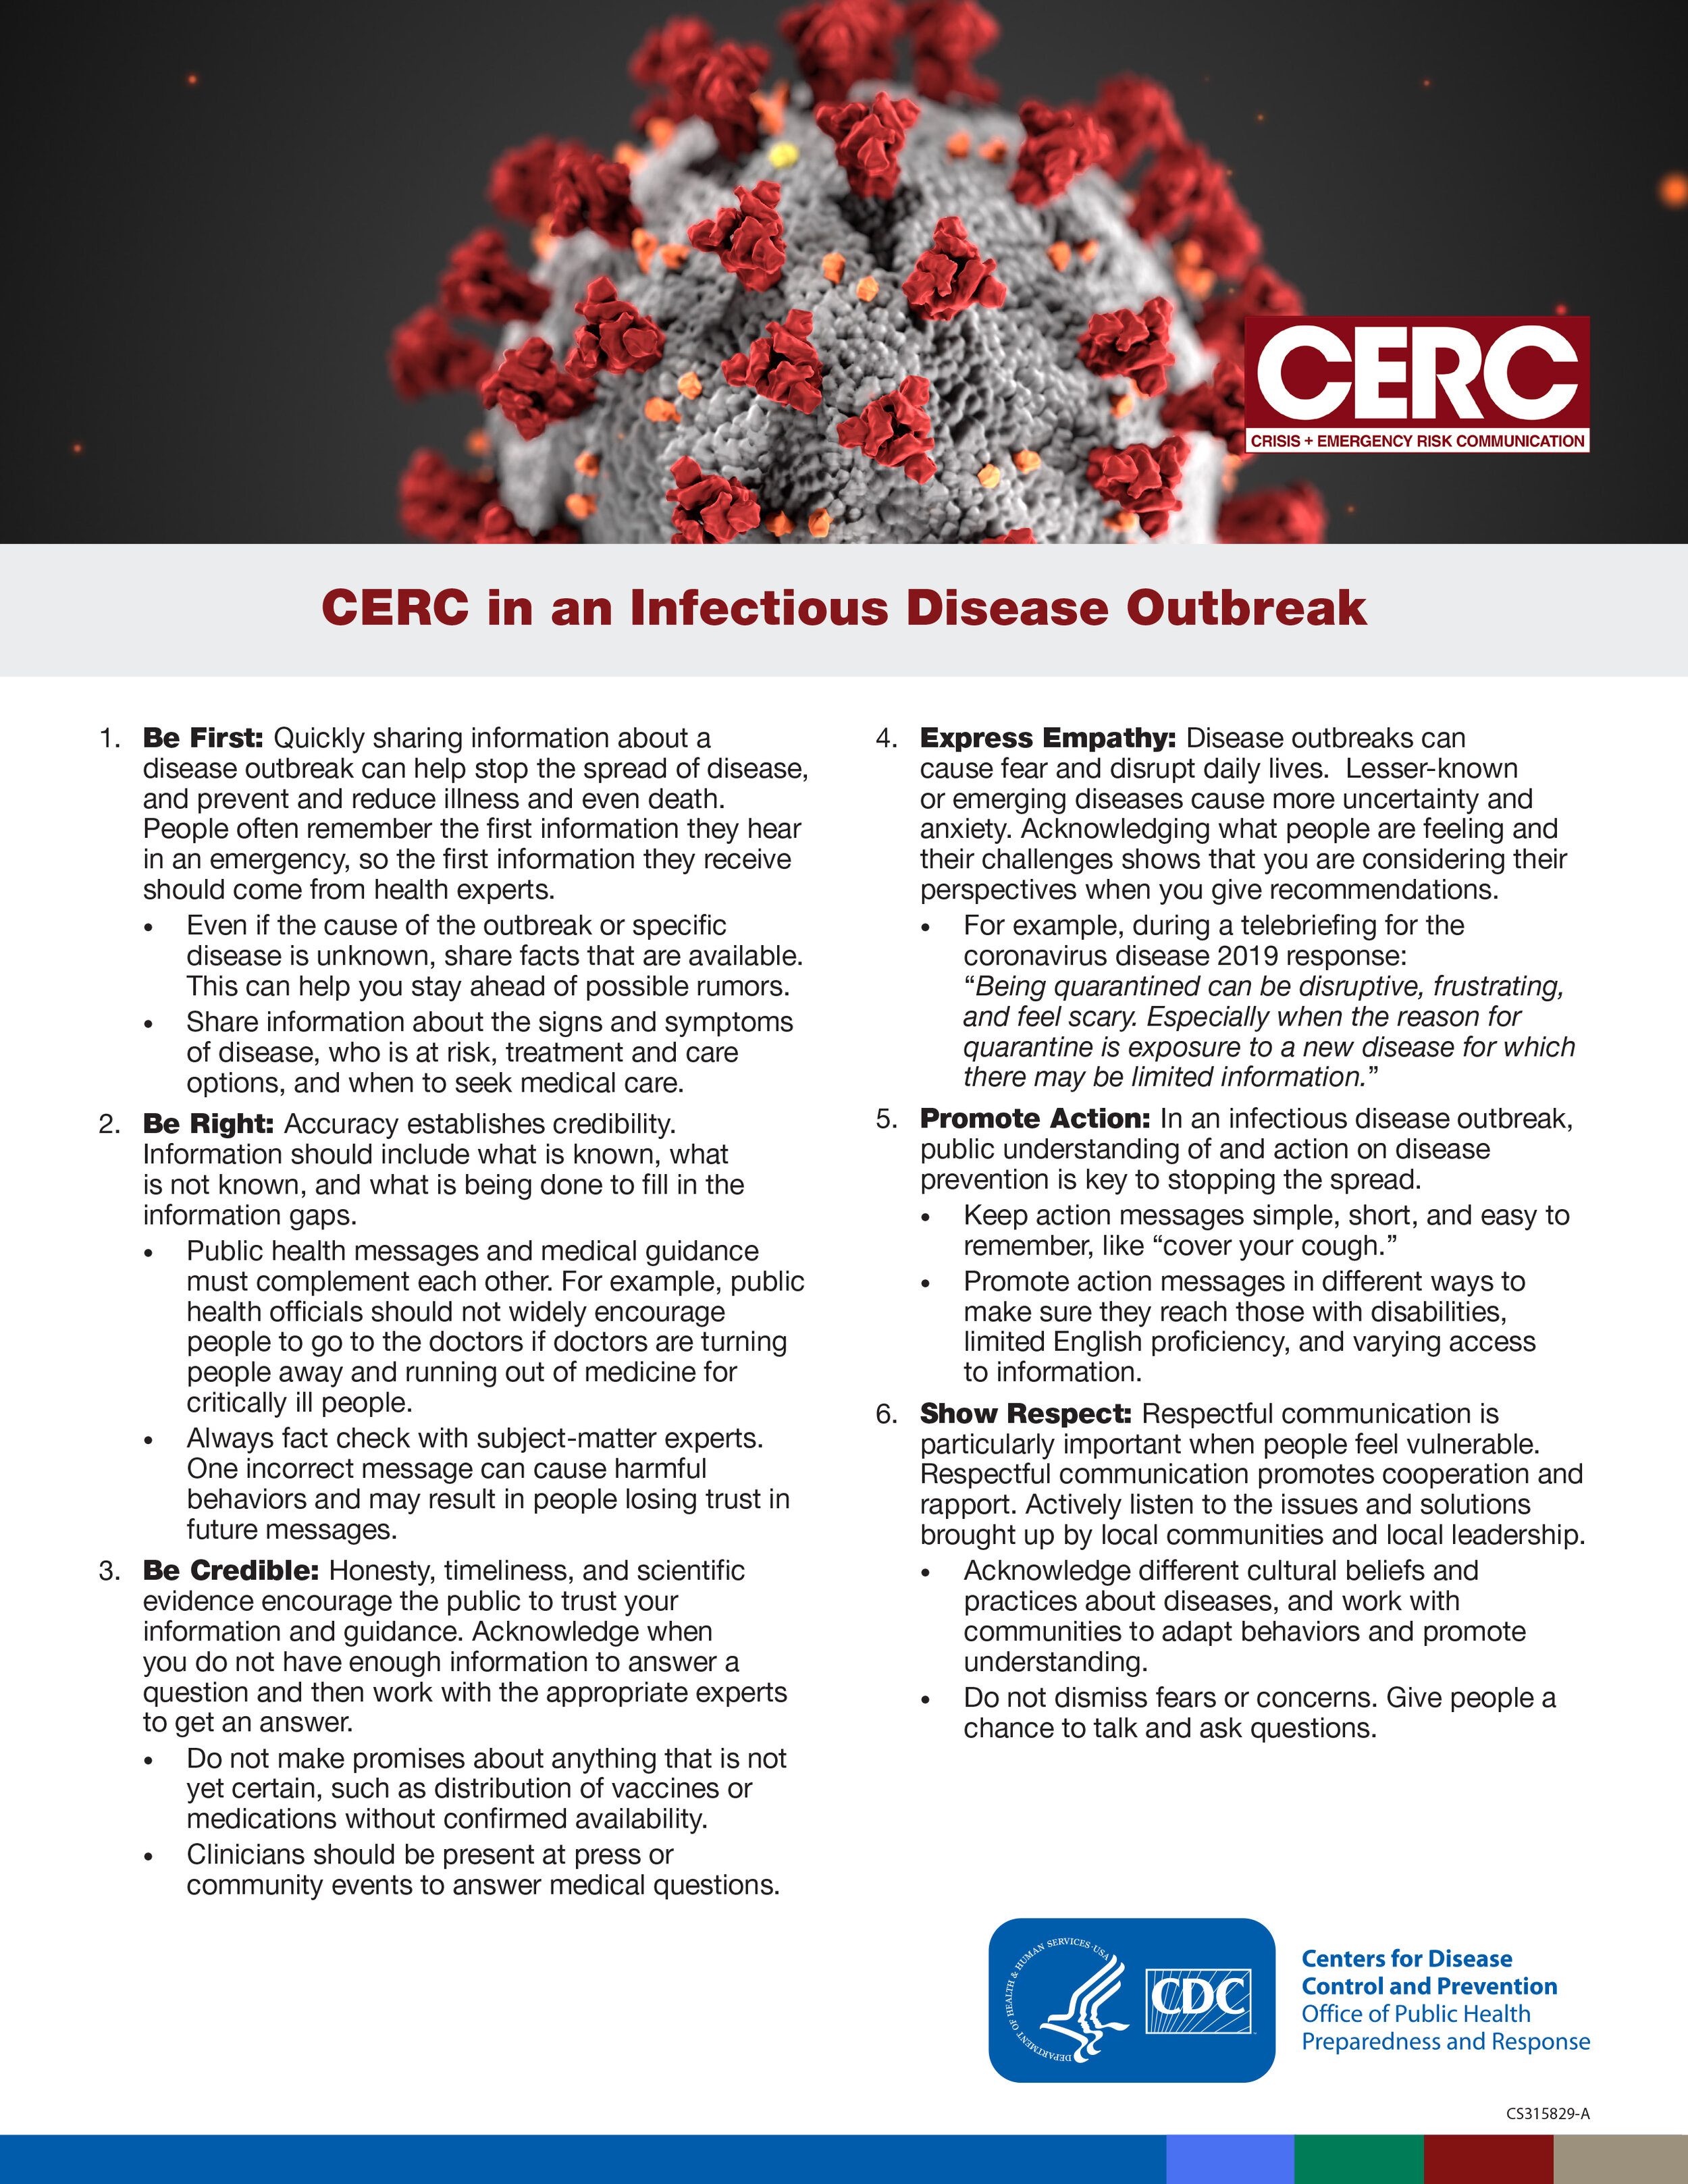 fs-CERC-Infectious-Disease.jpg